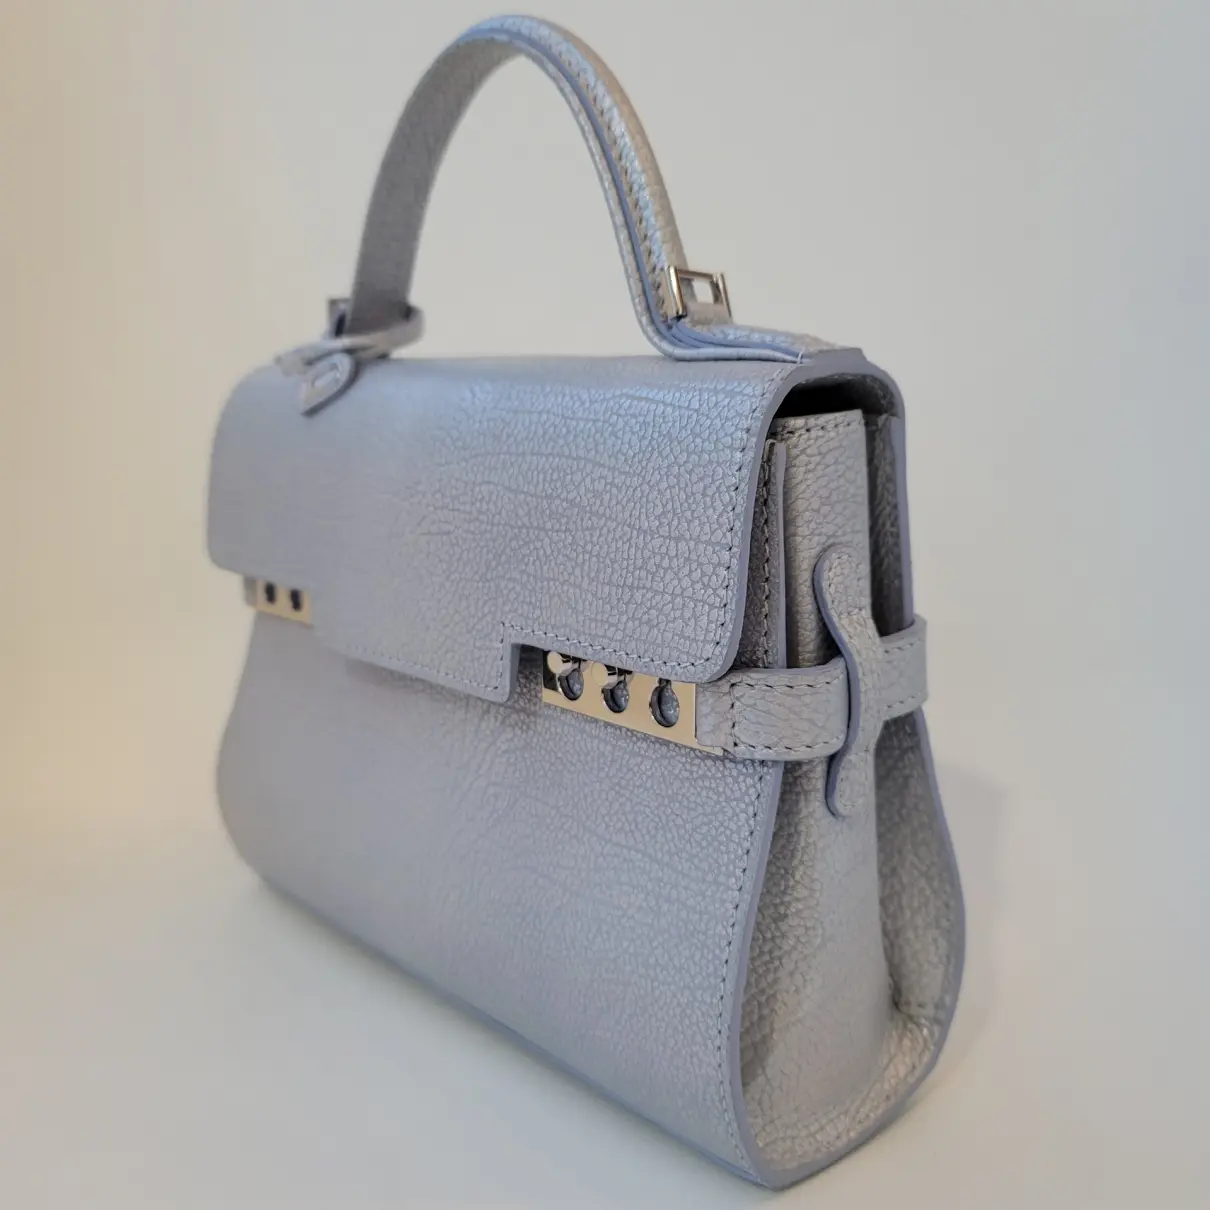 Buy Delvaux Tempête leather crossbody bag online